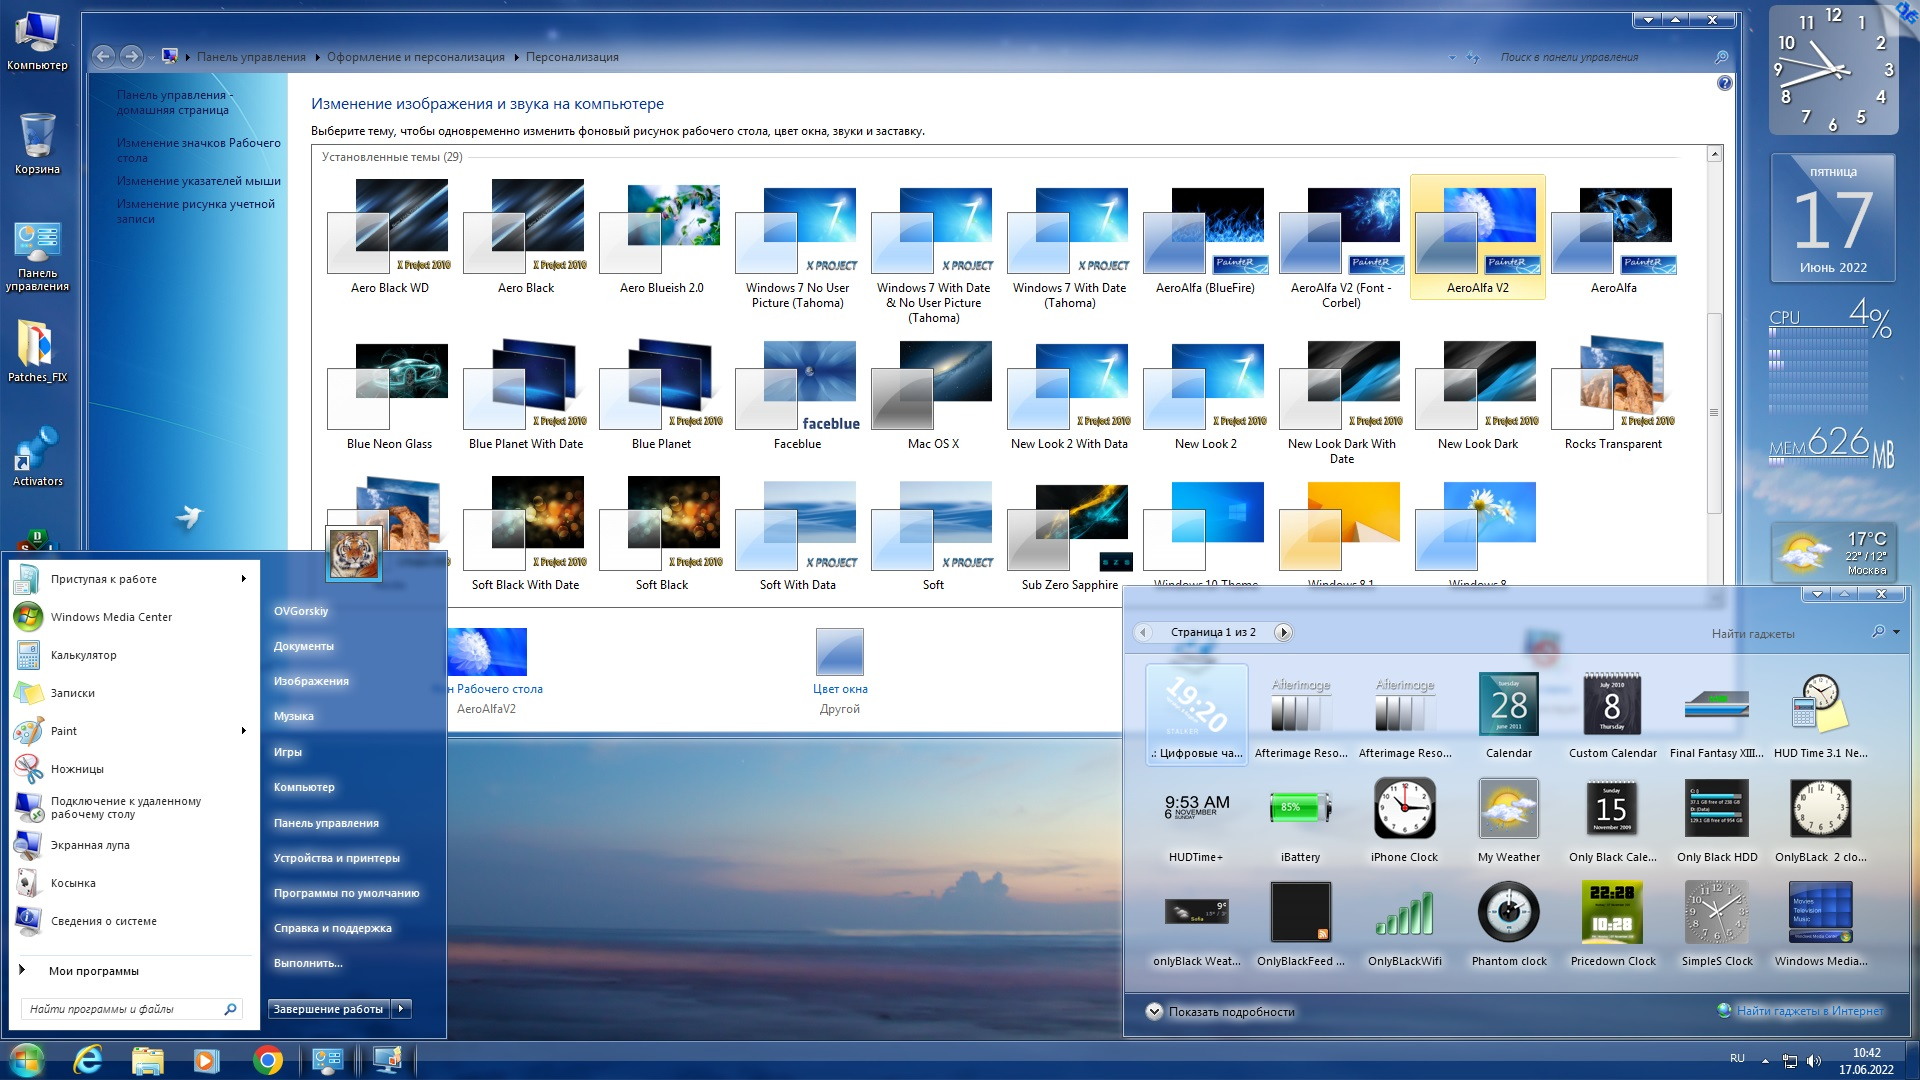 Microsoft® Windows® 7 Ultimate Ru x86/x64 nBook IE11 by OVGorskiy 06.2022 1DVD